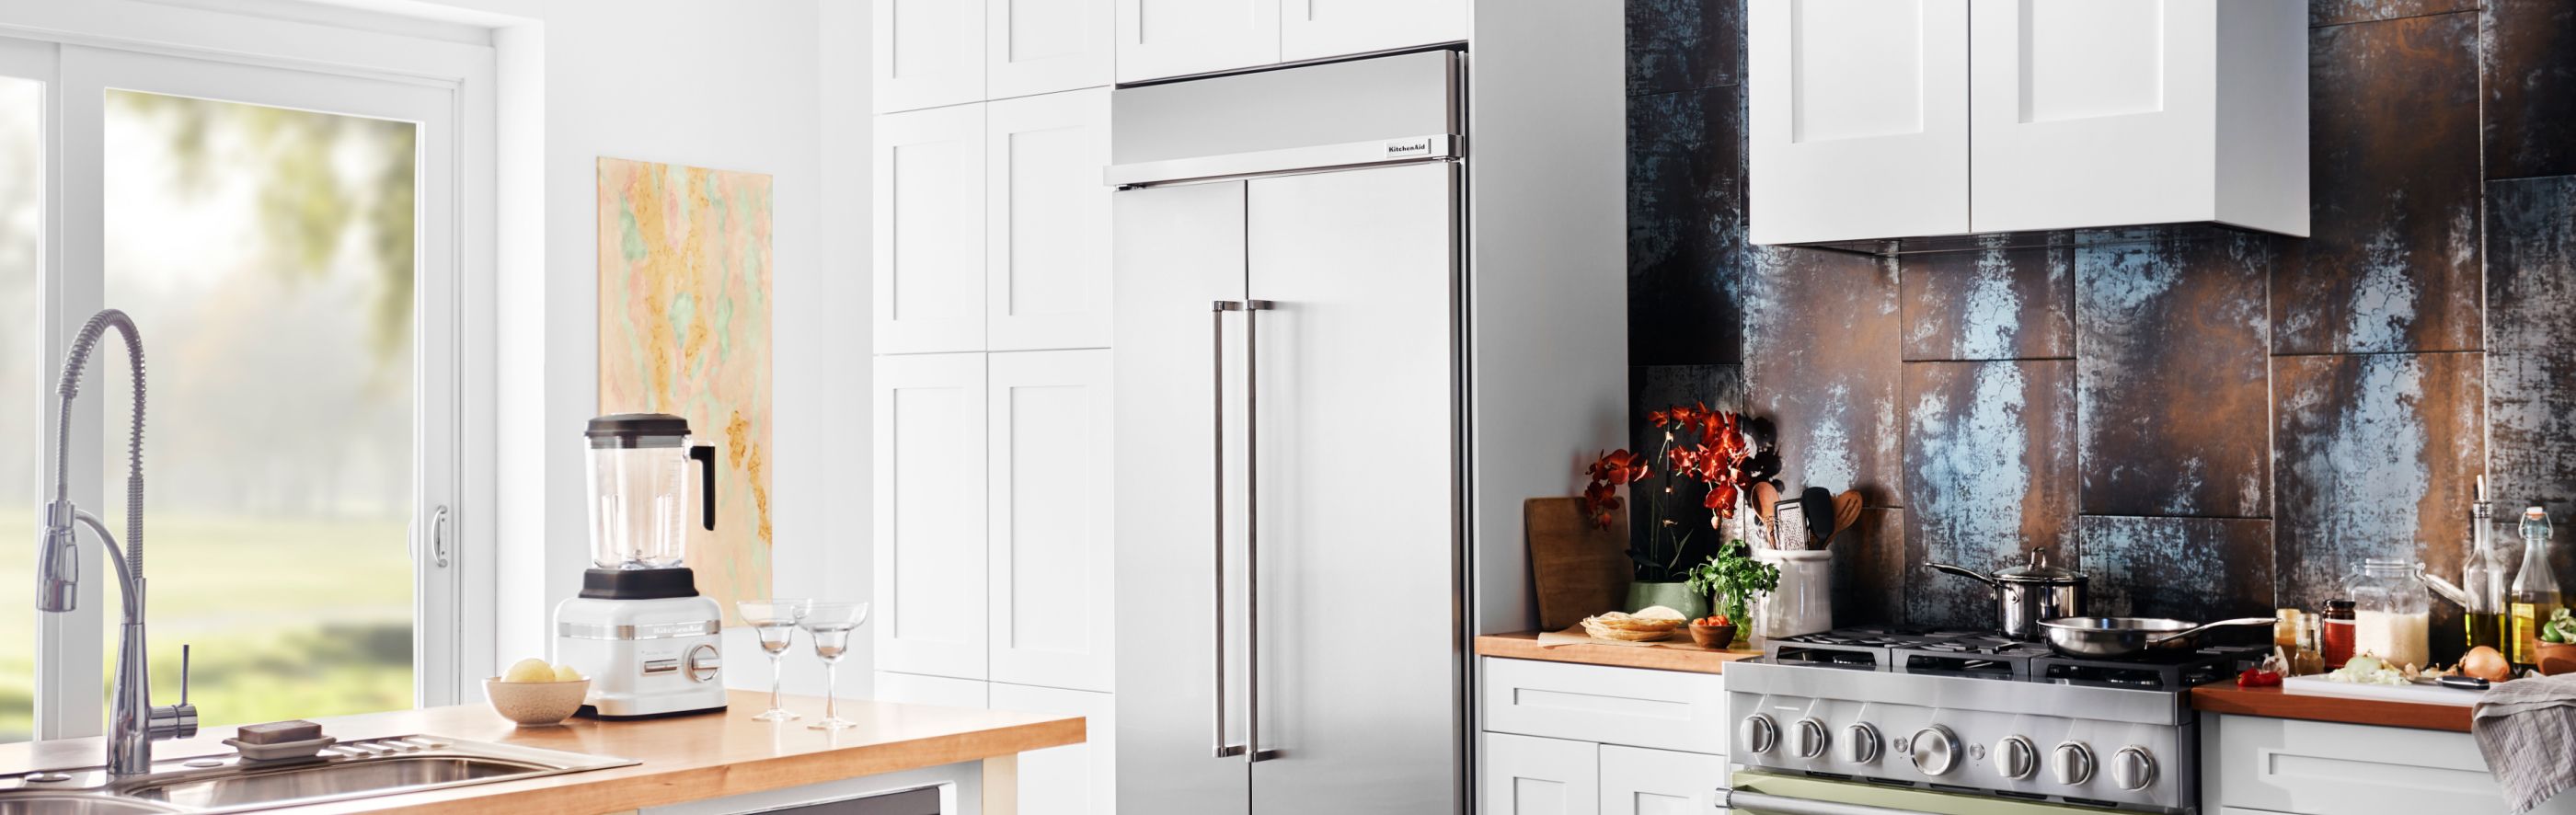 KitchenAid® Side-by-Side Refrigerator in a white kitchen